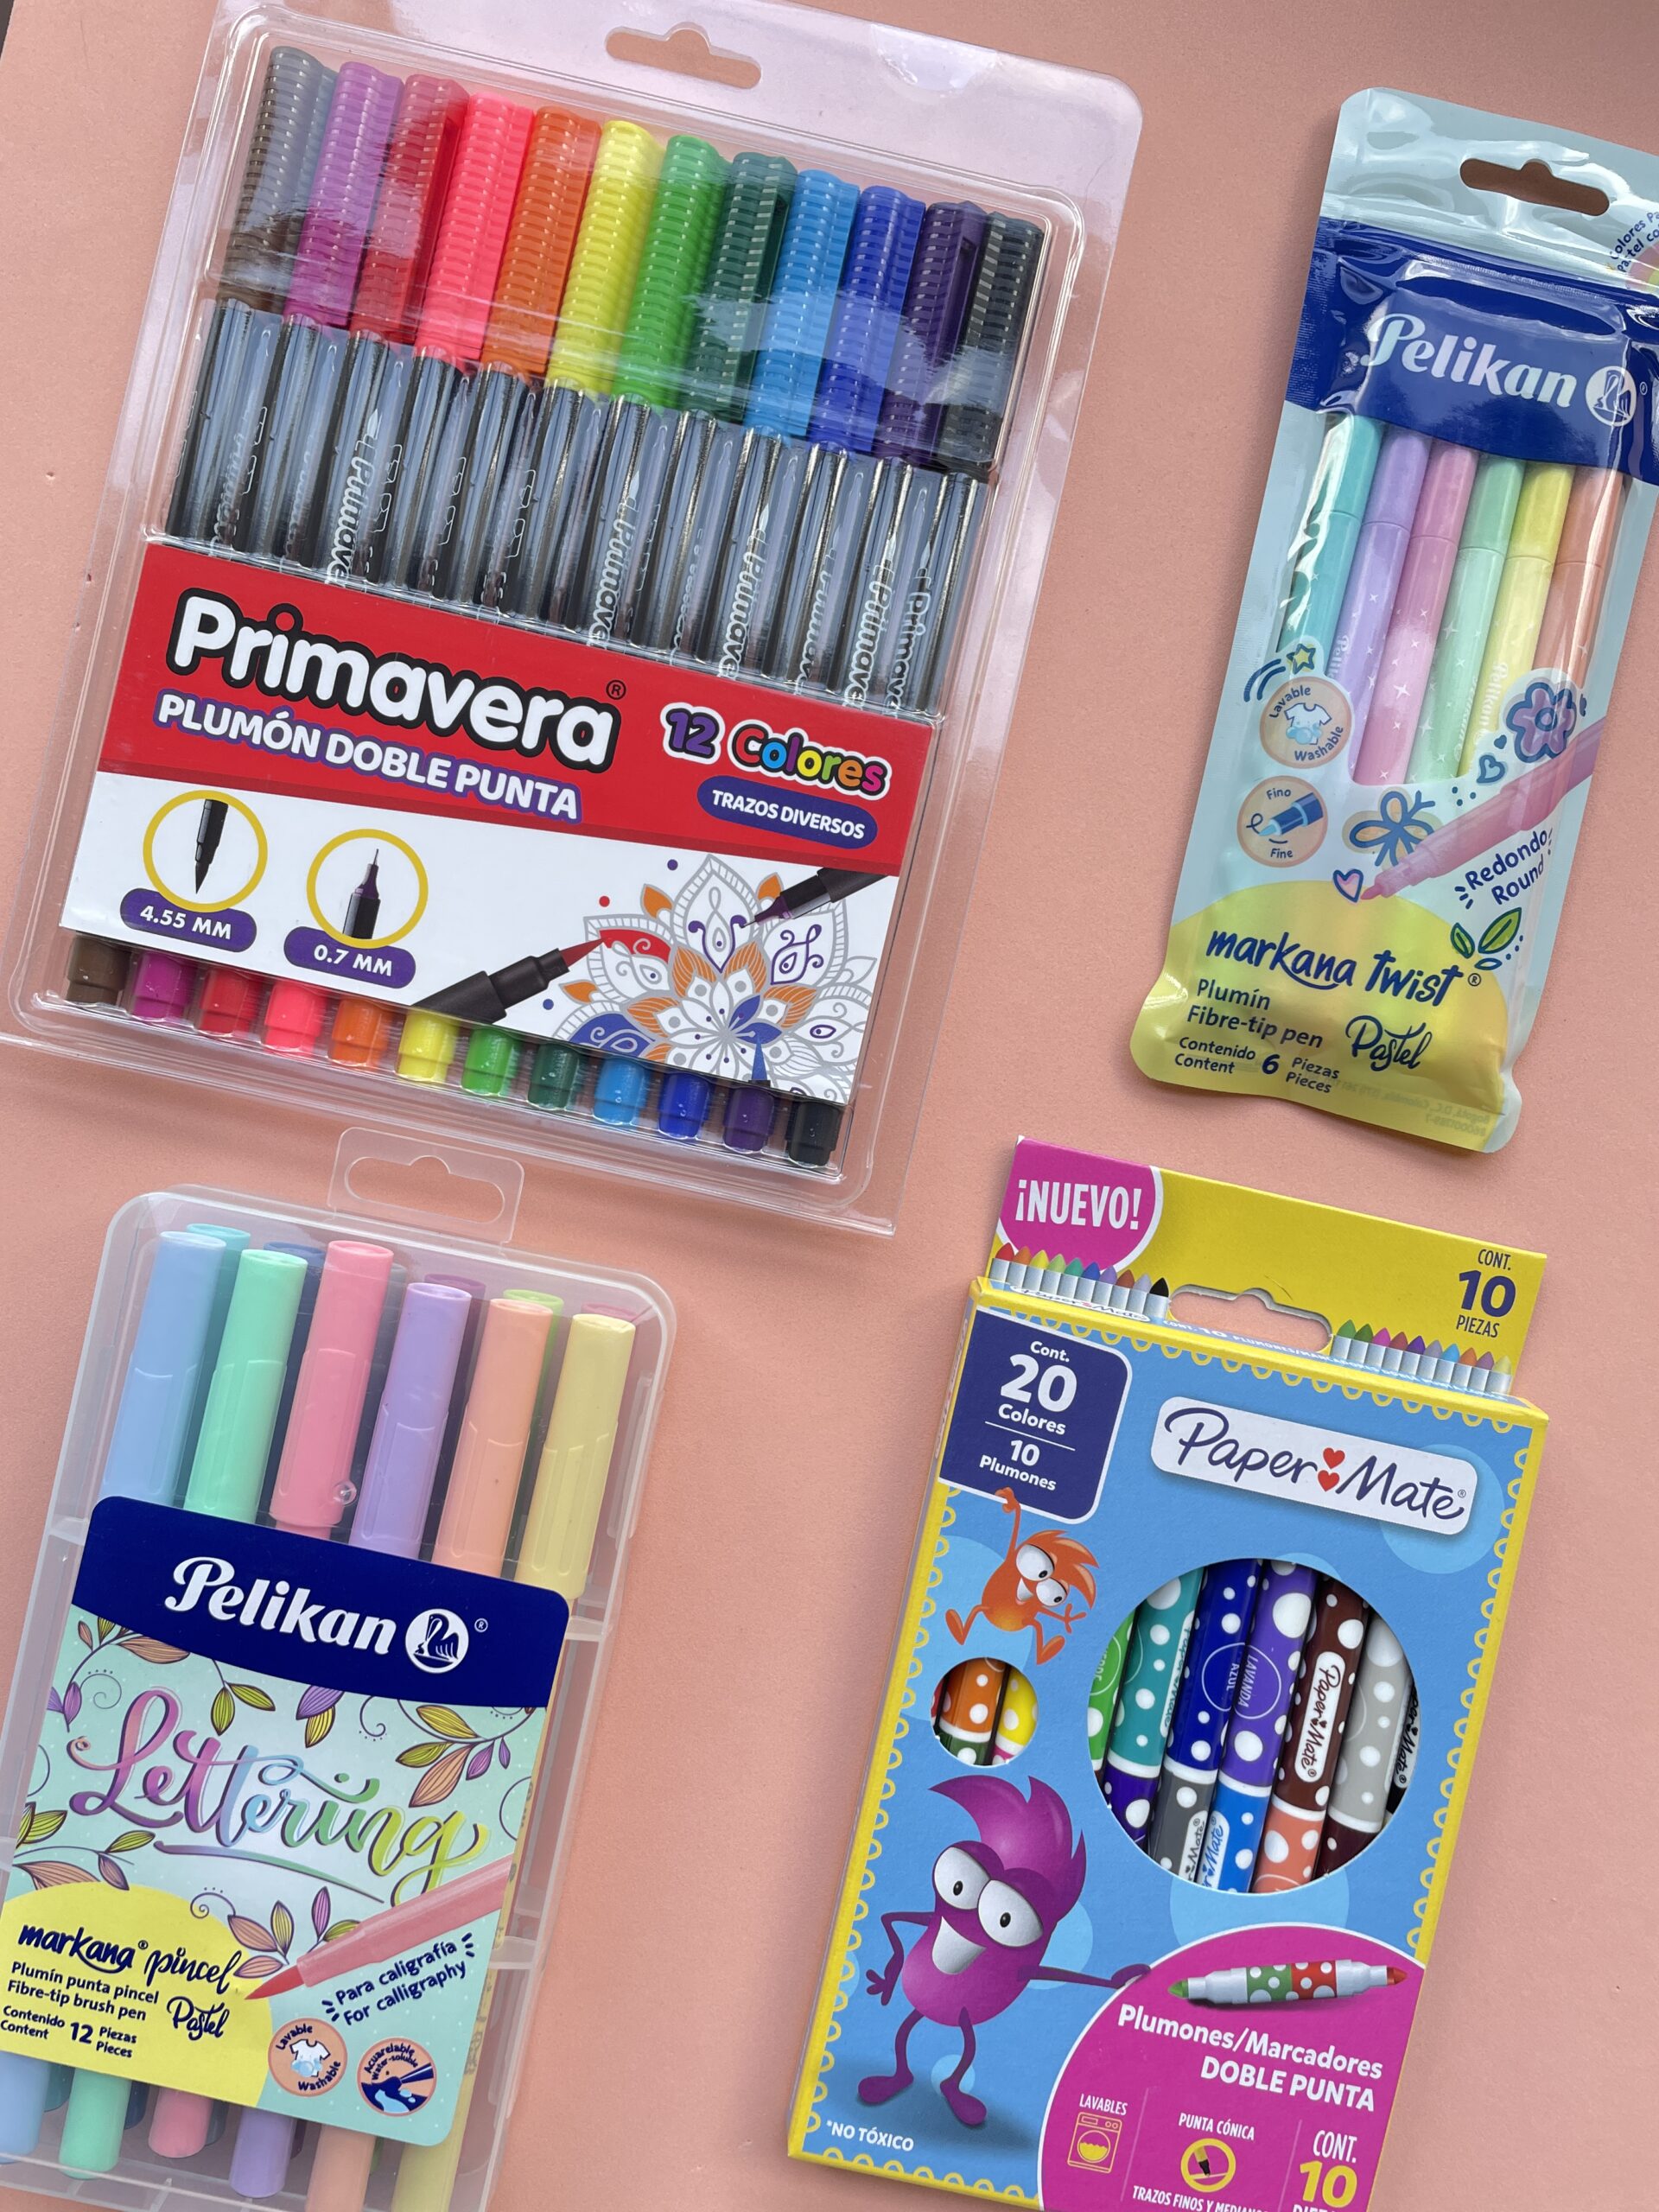 Kit De Lettering Intermedio Brw Con Manual Y Brush Pen